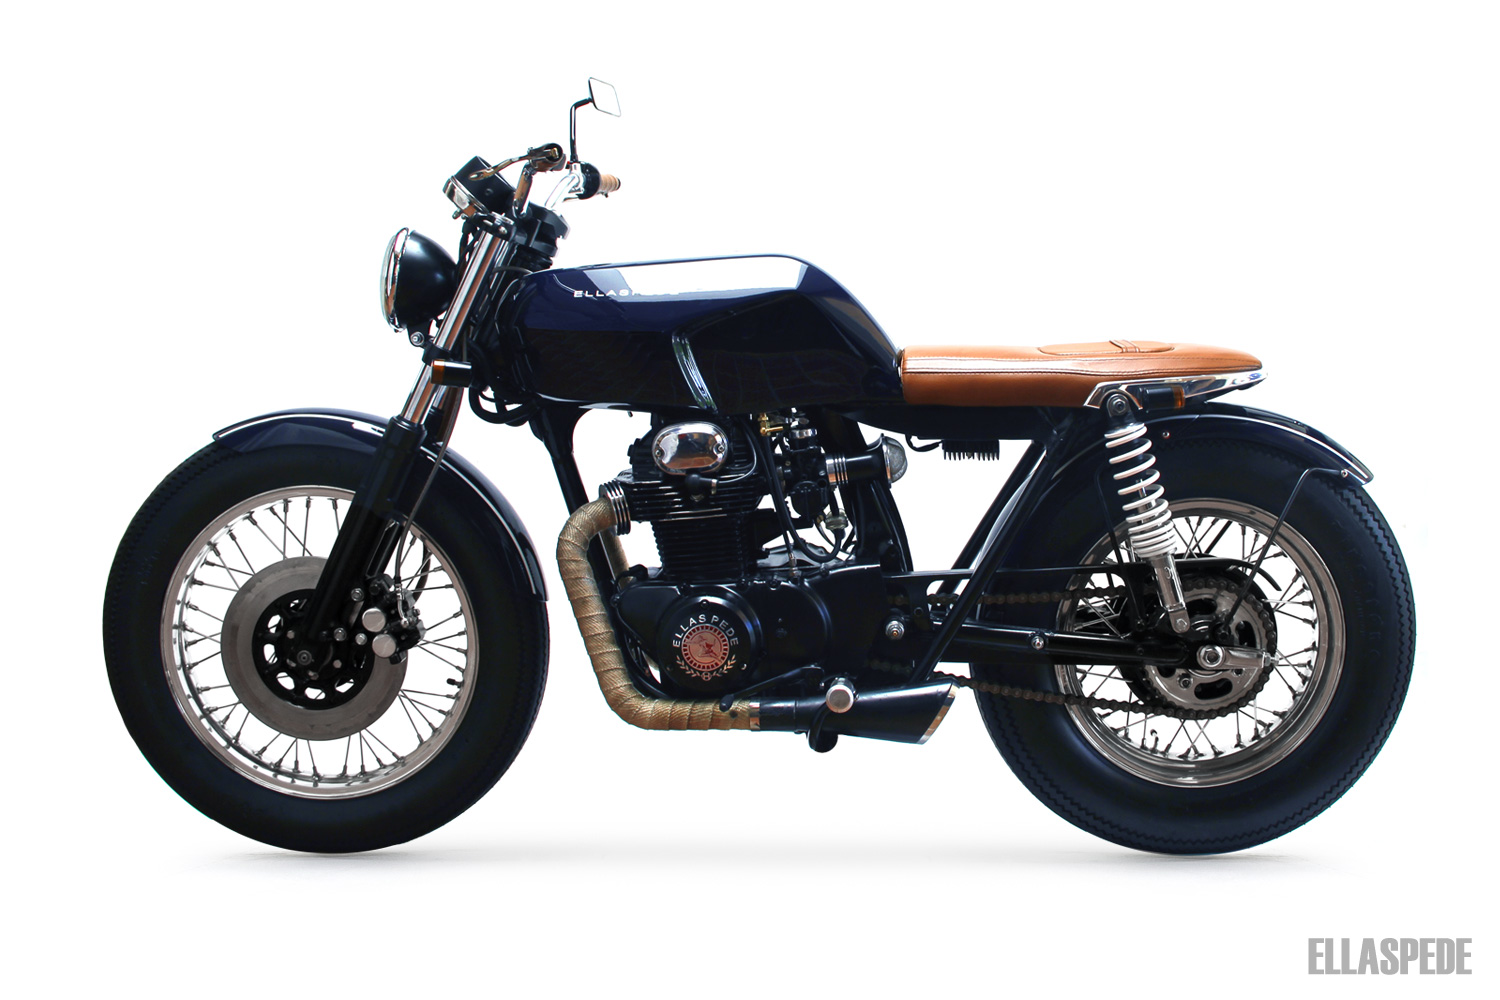 EB001 – 1971 Honda CB350 image